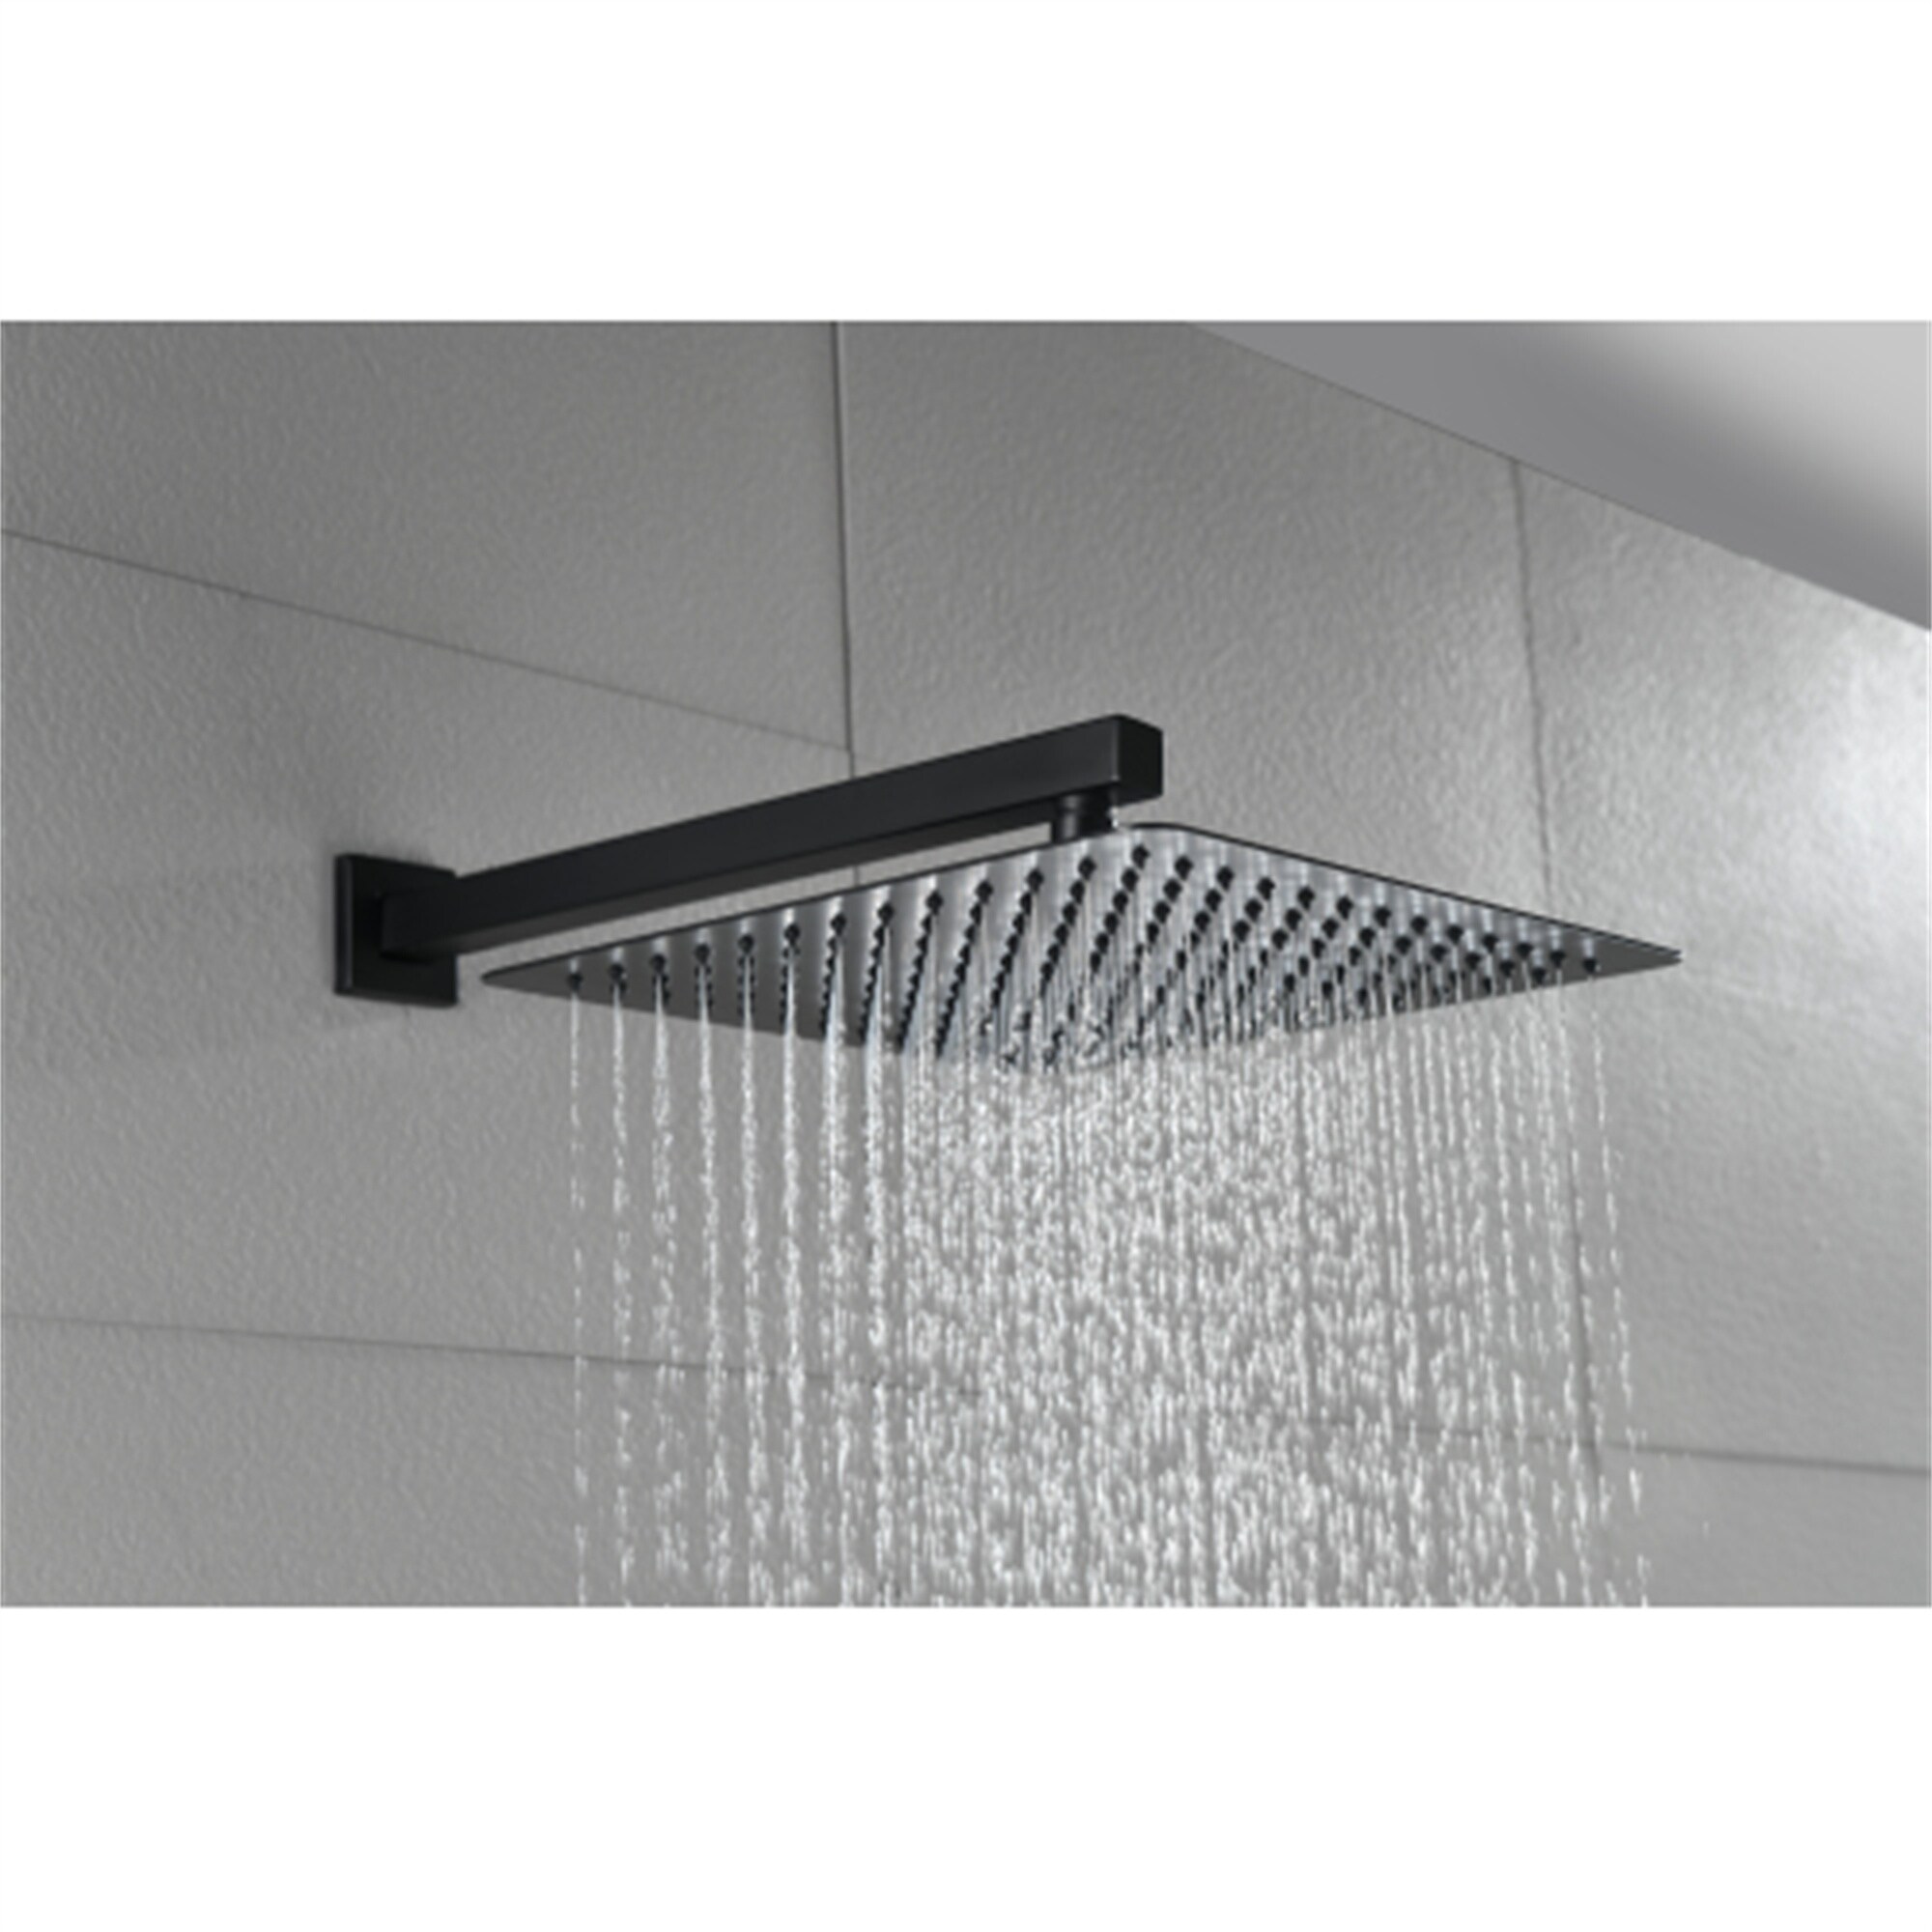 16 Inches Matte Black Shower Set System Bathroom Shower Head Faucet